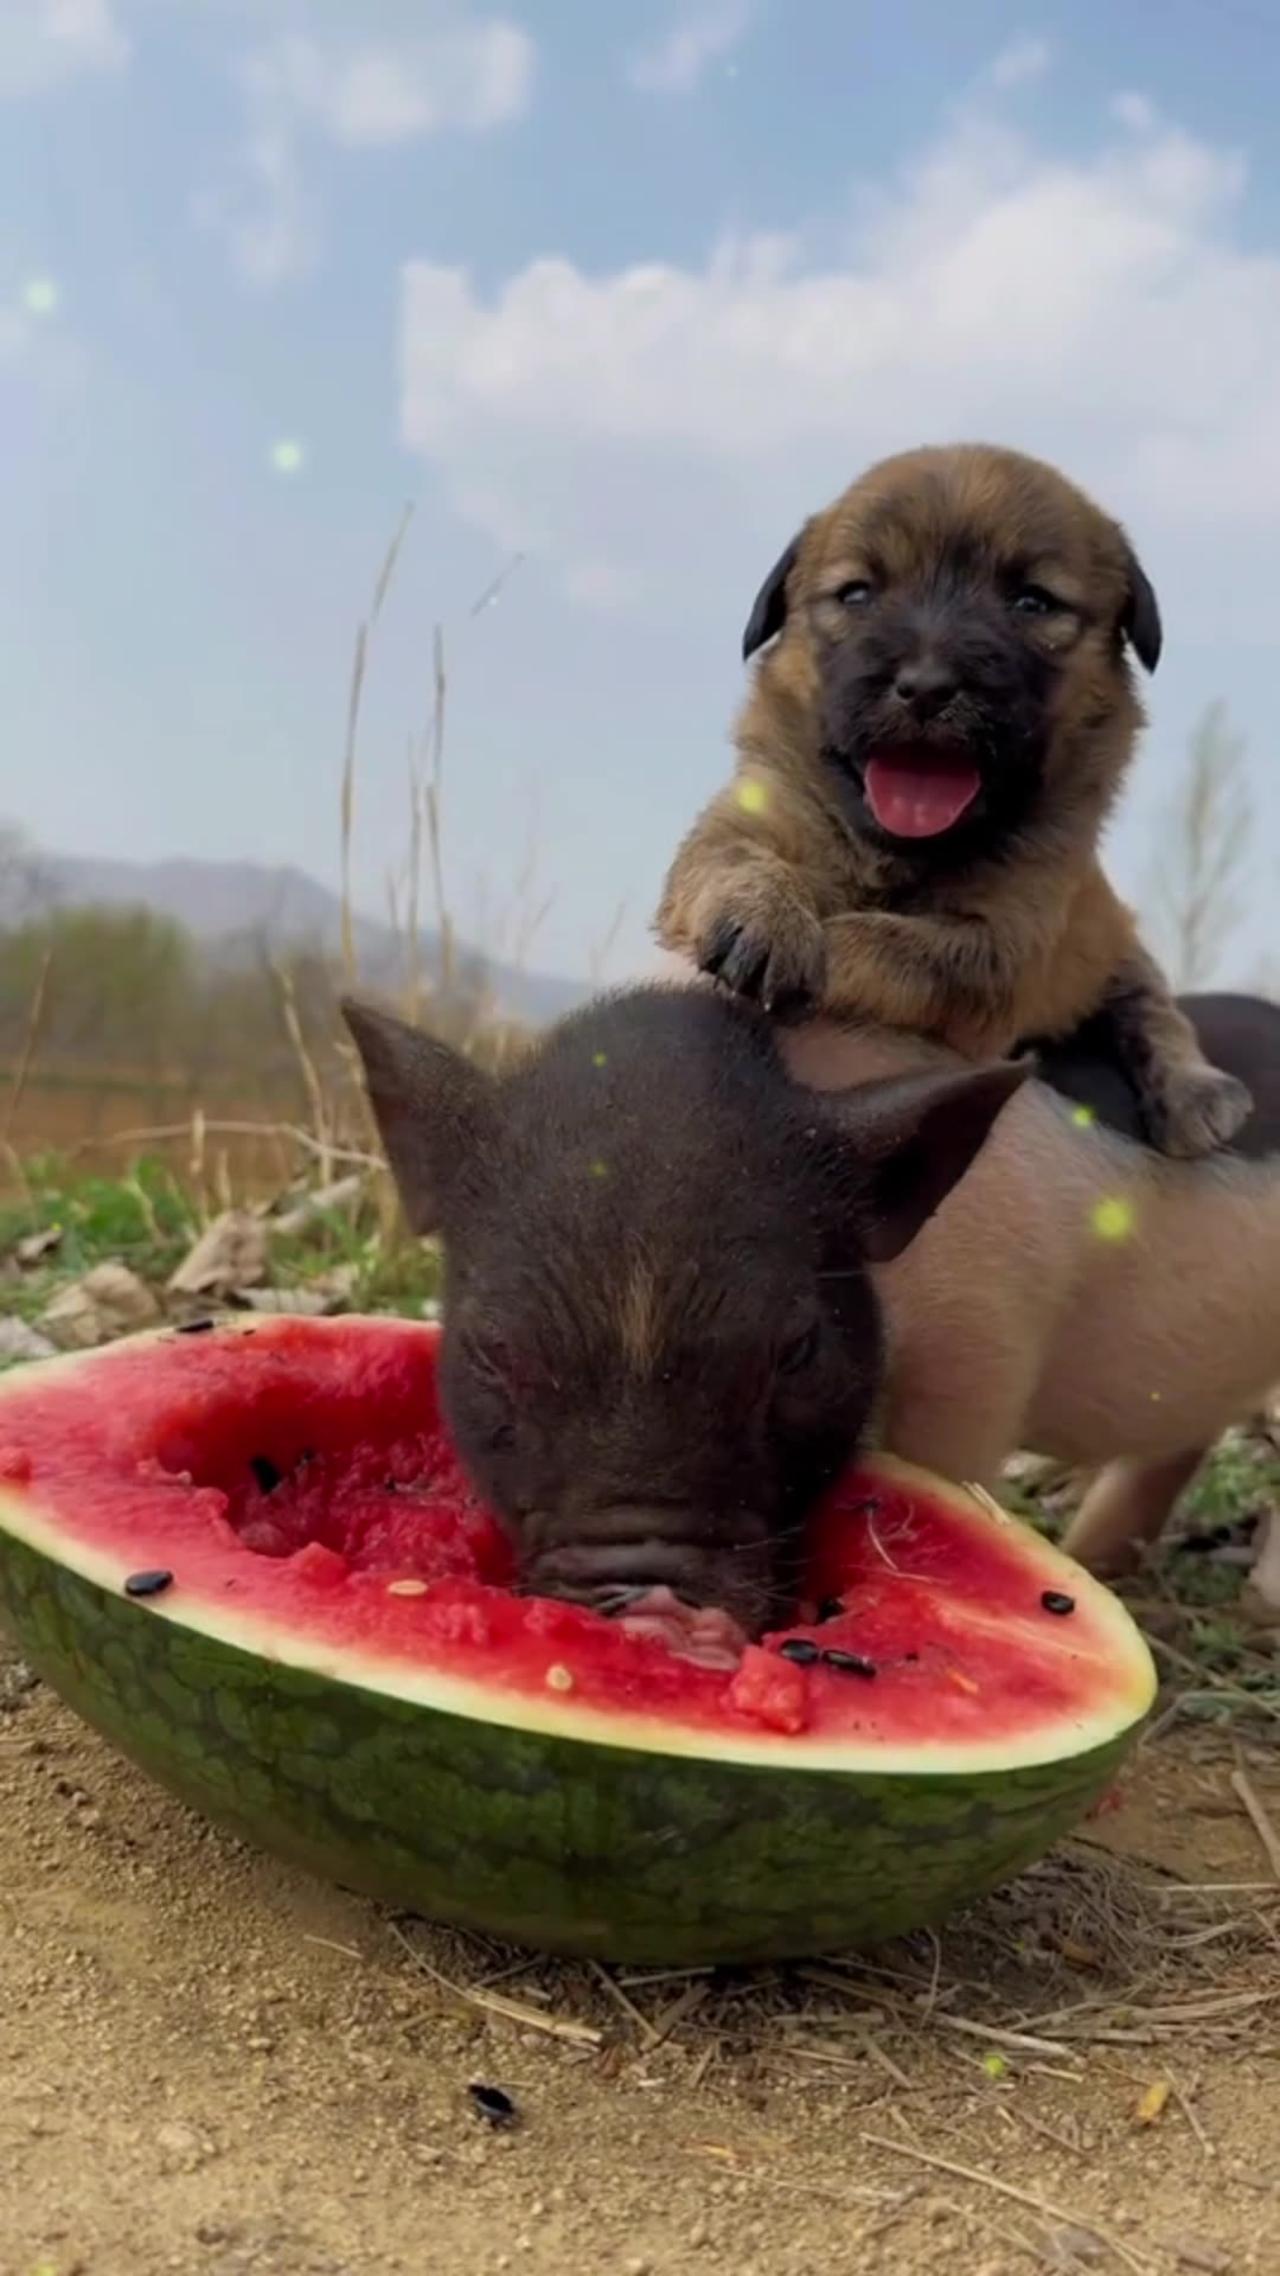 Cute little pig eating watermelon